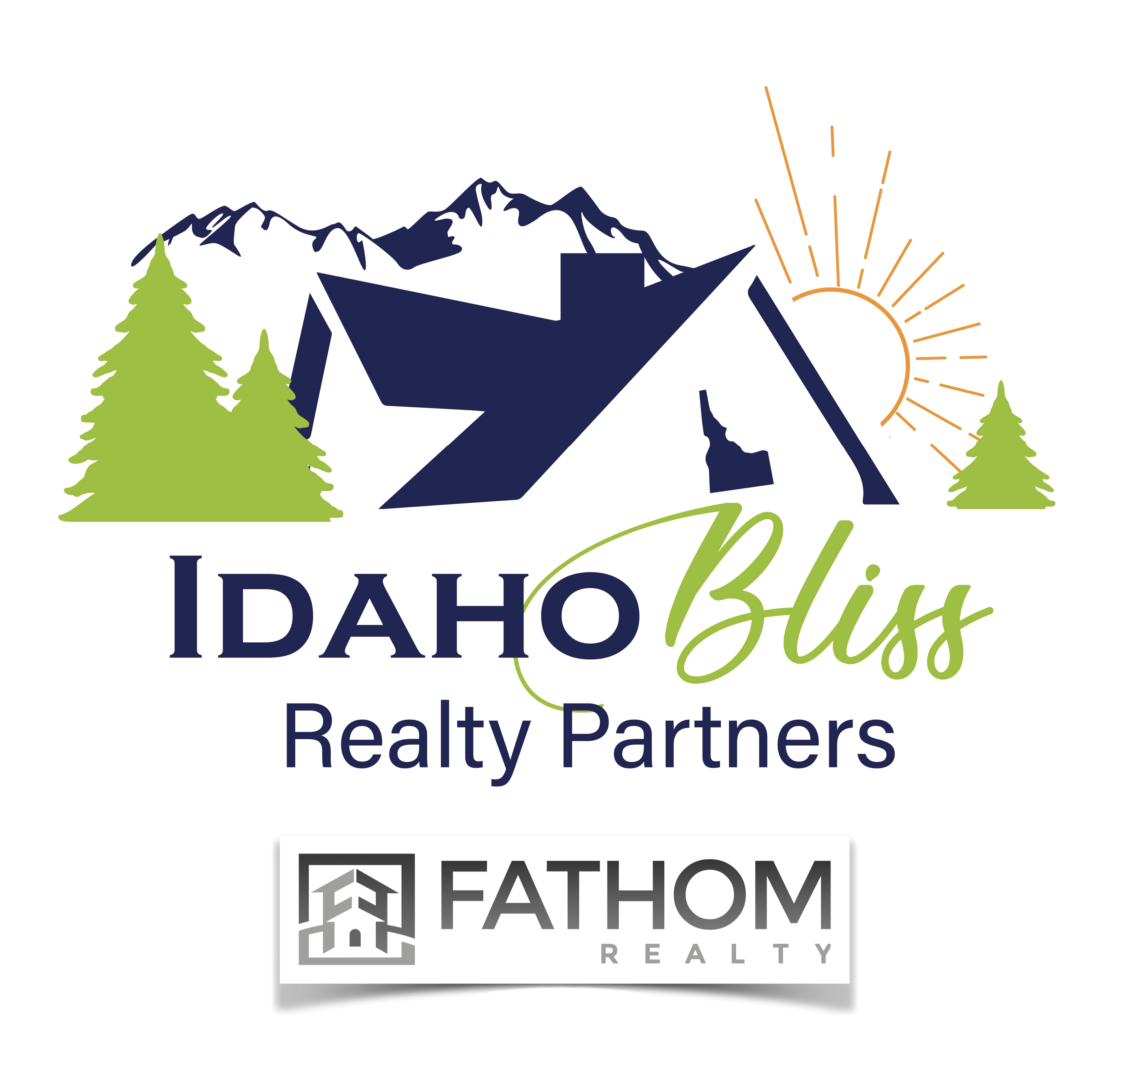 Idaho Bliss Fathom Logo